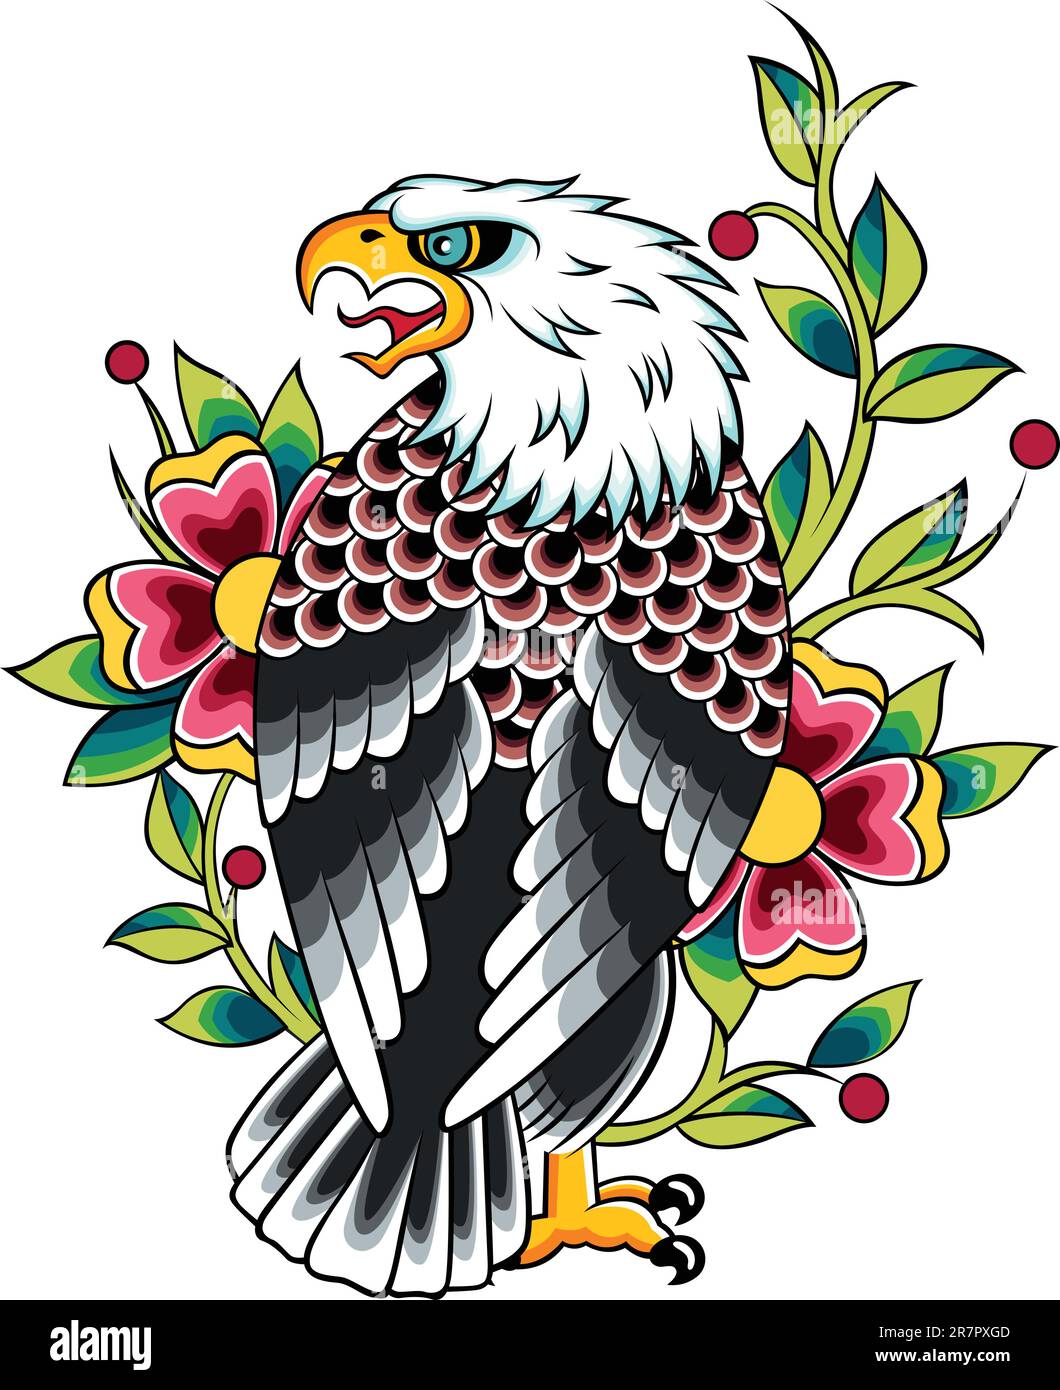 ArtStation - Traditional Eagle - Tattoo Inspired Illustration